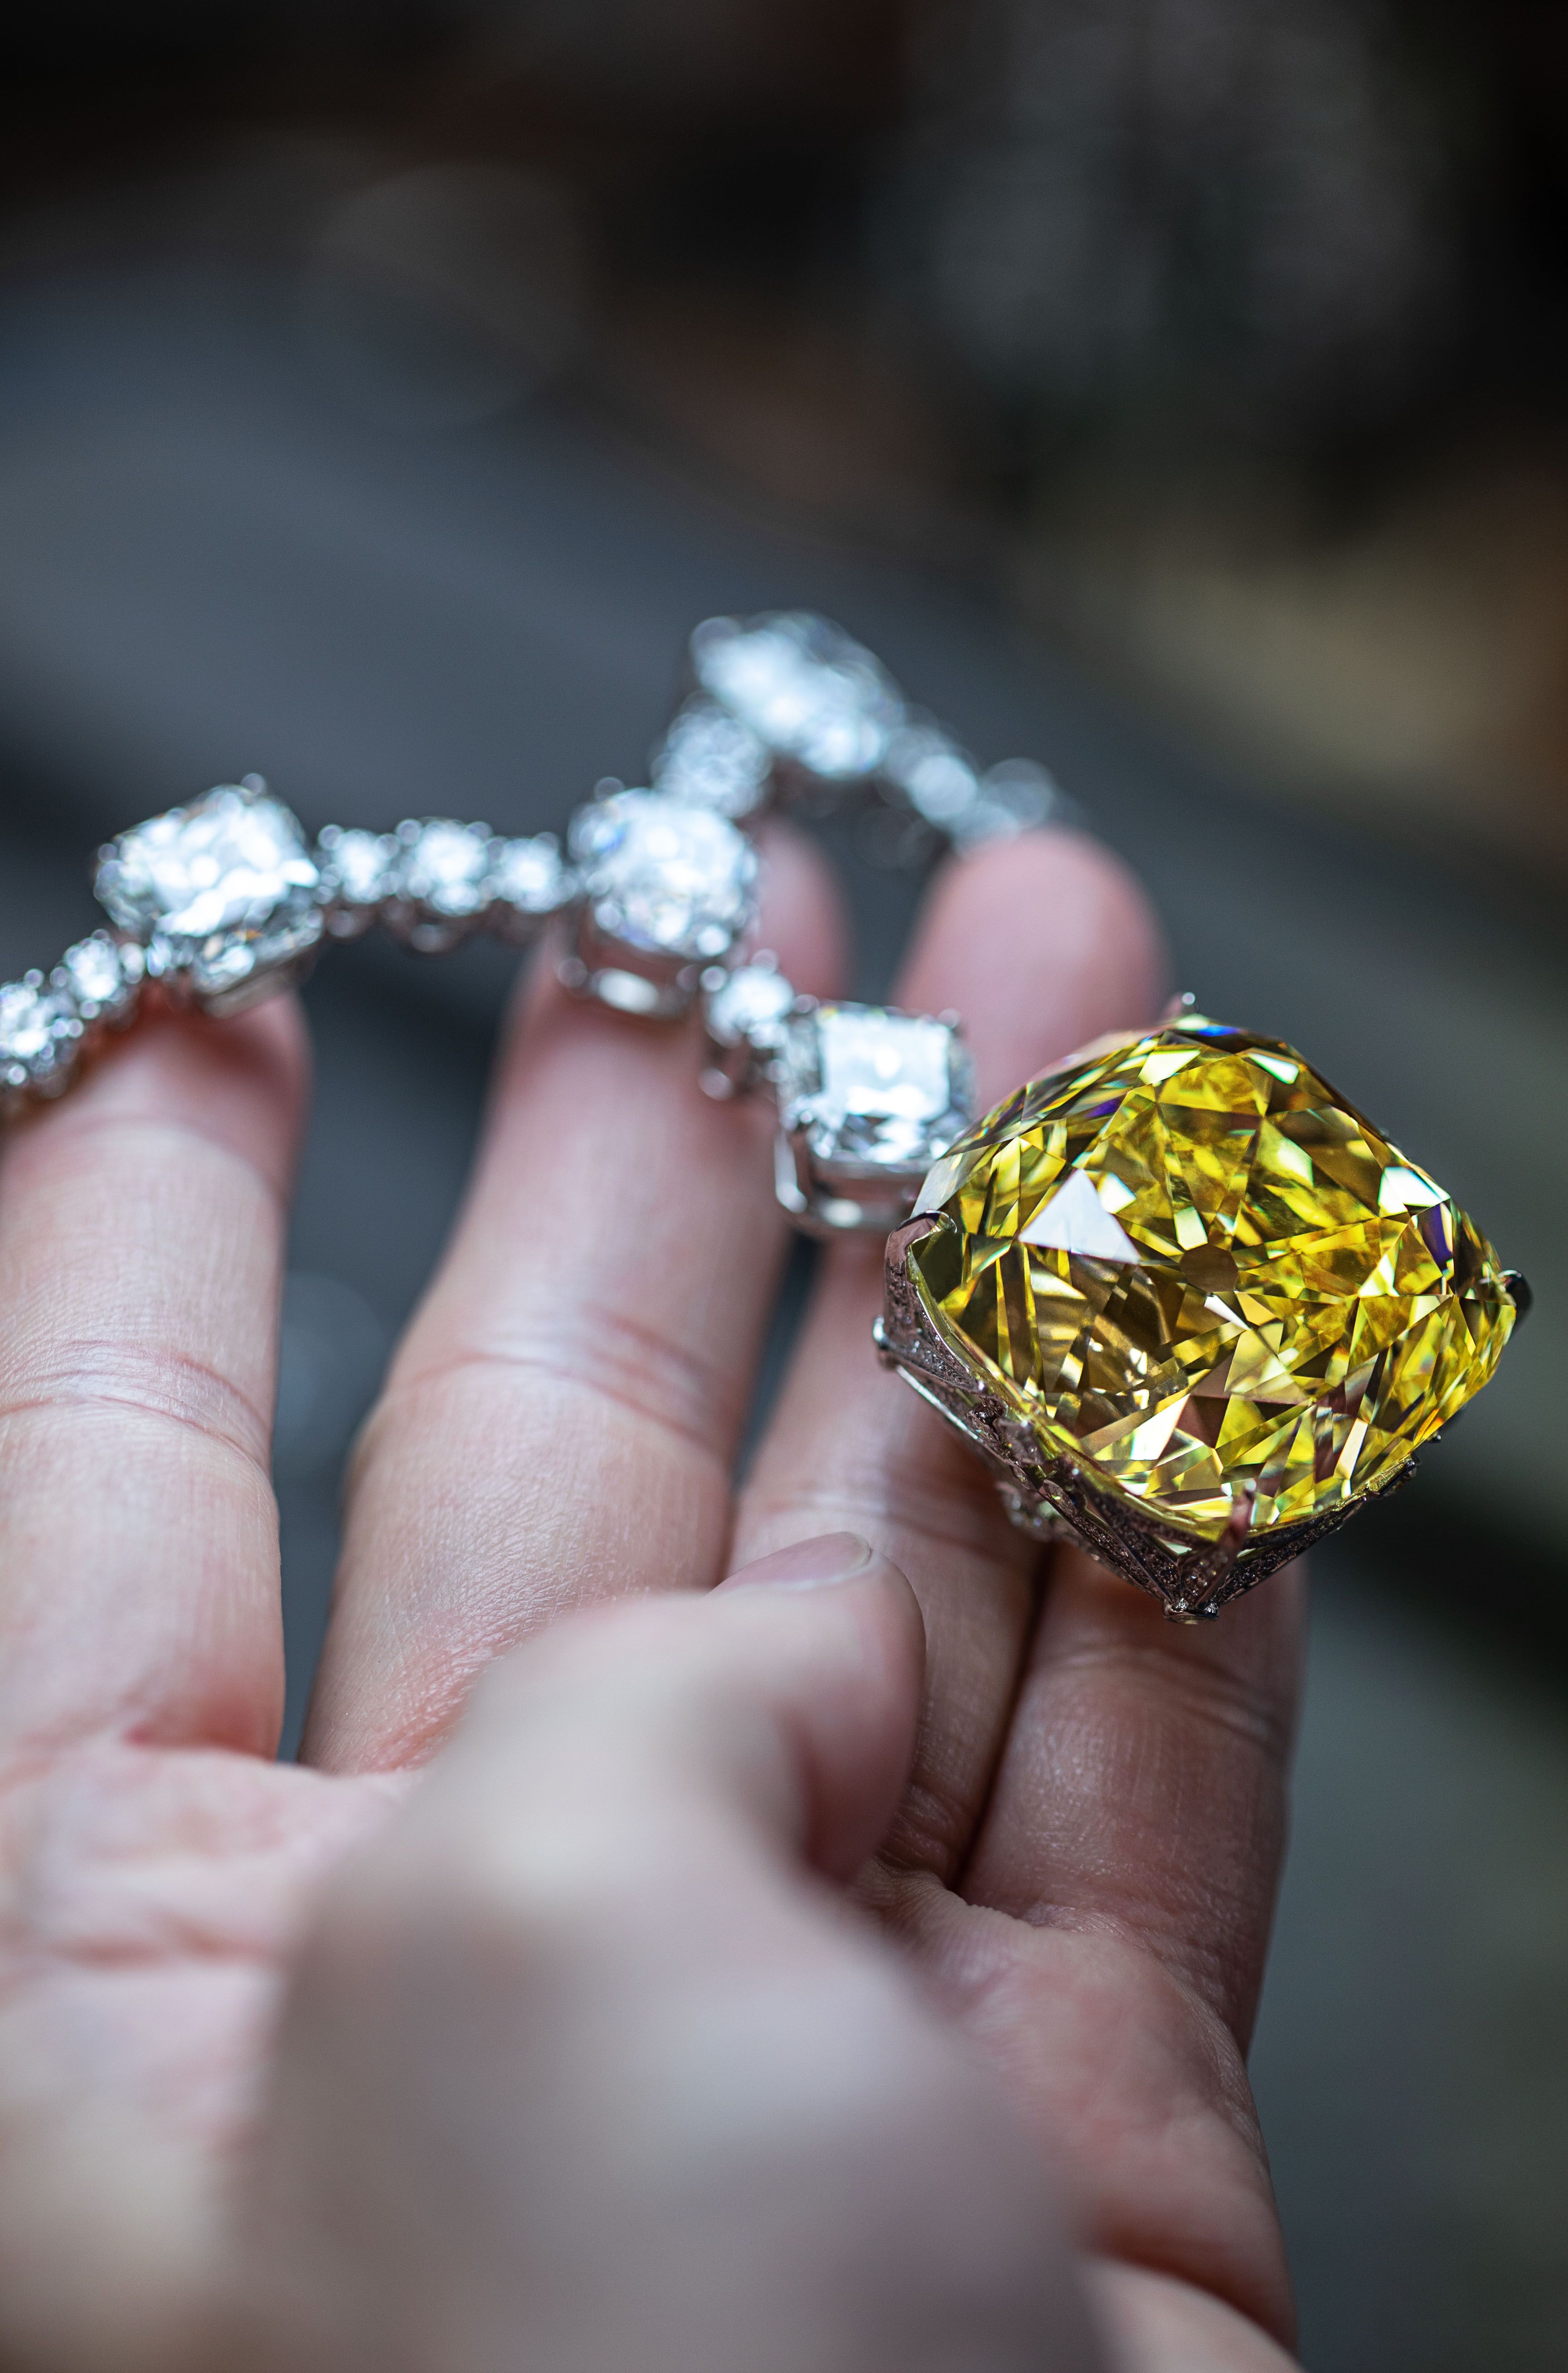 128 carat tiffany diamond price